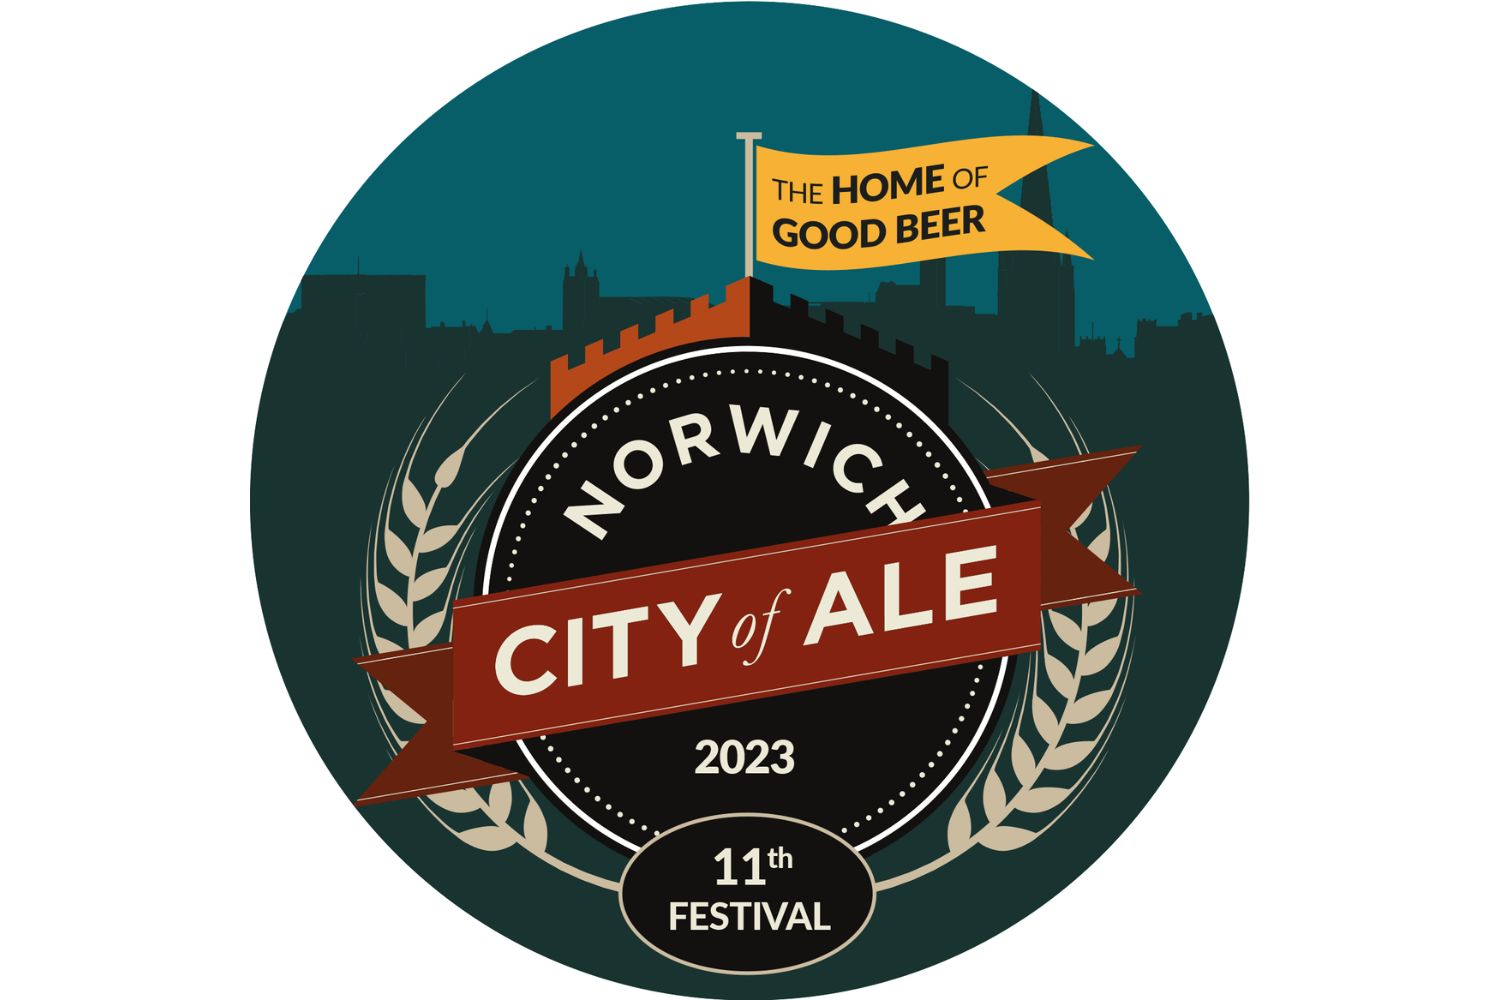 Norwich City of Ale 2023